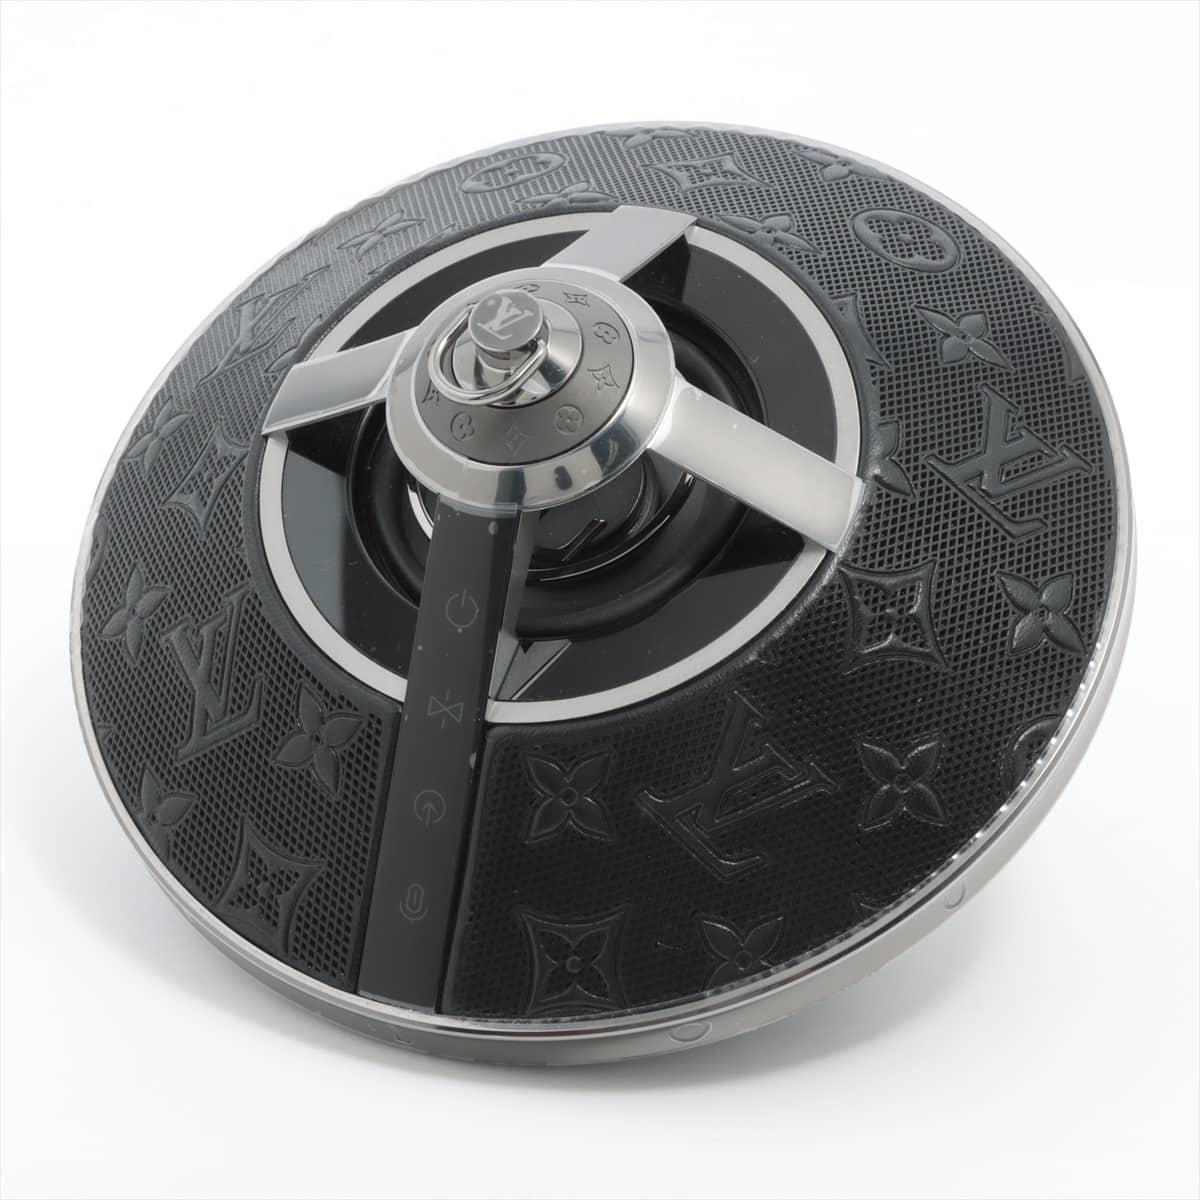 Louis Vuitton C Horizon Light up speakers speakers Metallic material Black